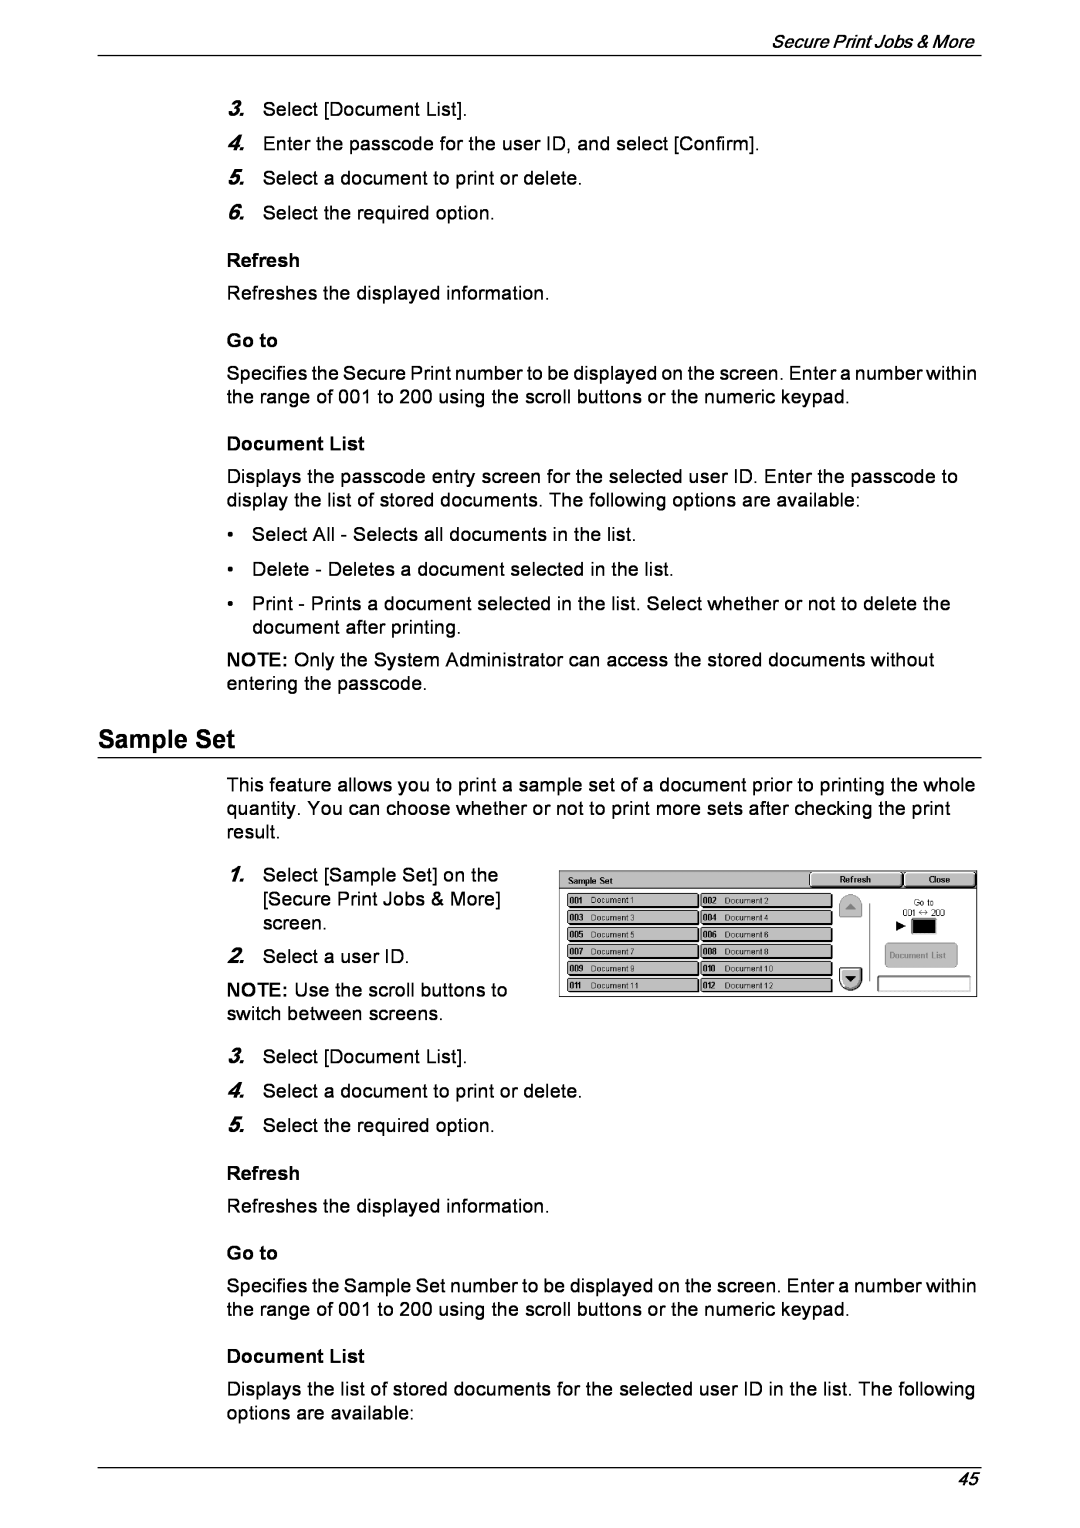 Xerox 5222 manual Sample Set, Refresh, Go to, Document List 